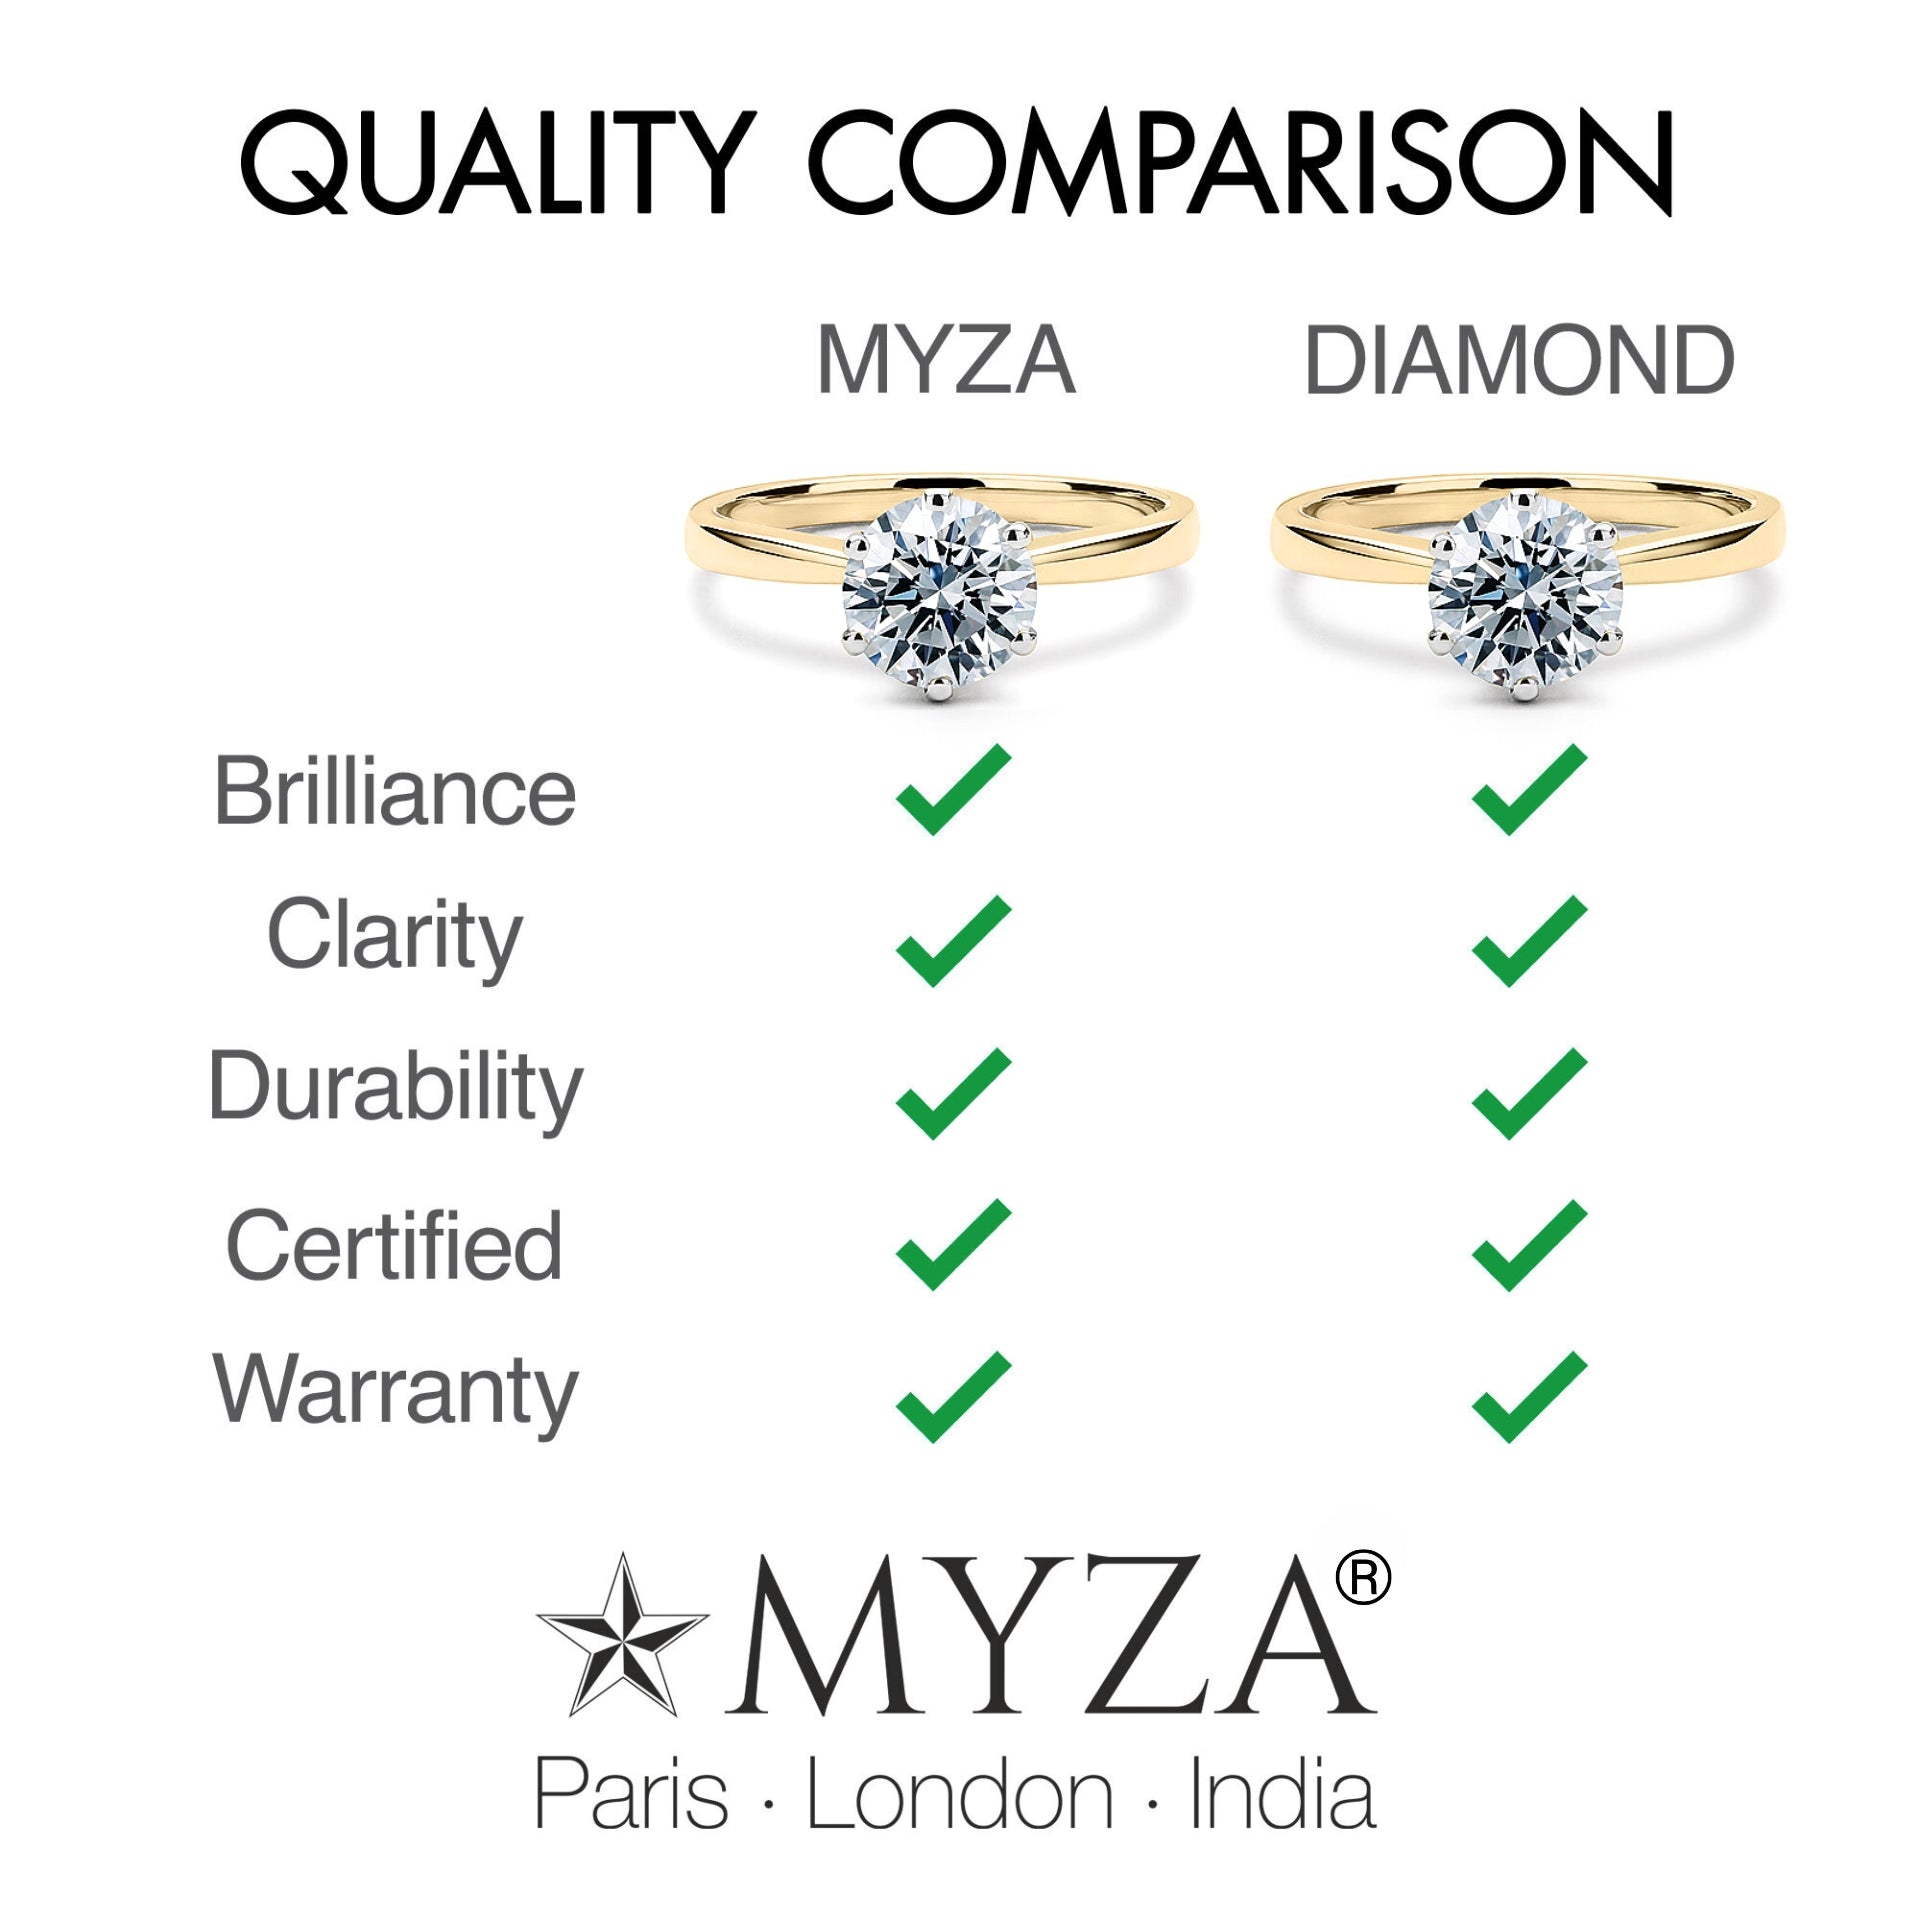 1-Carat MYZA Hallmark Gold Ring - MYZA 